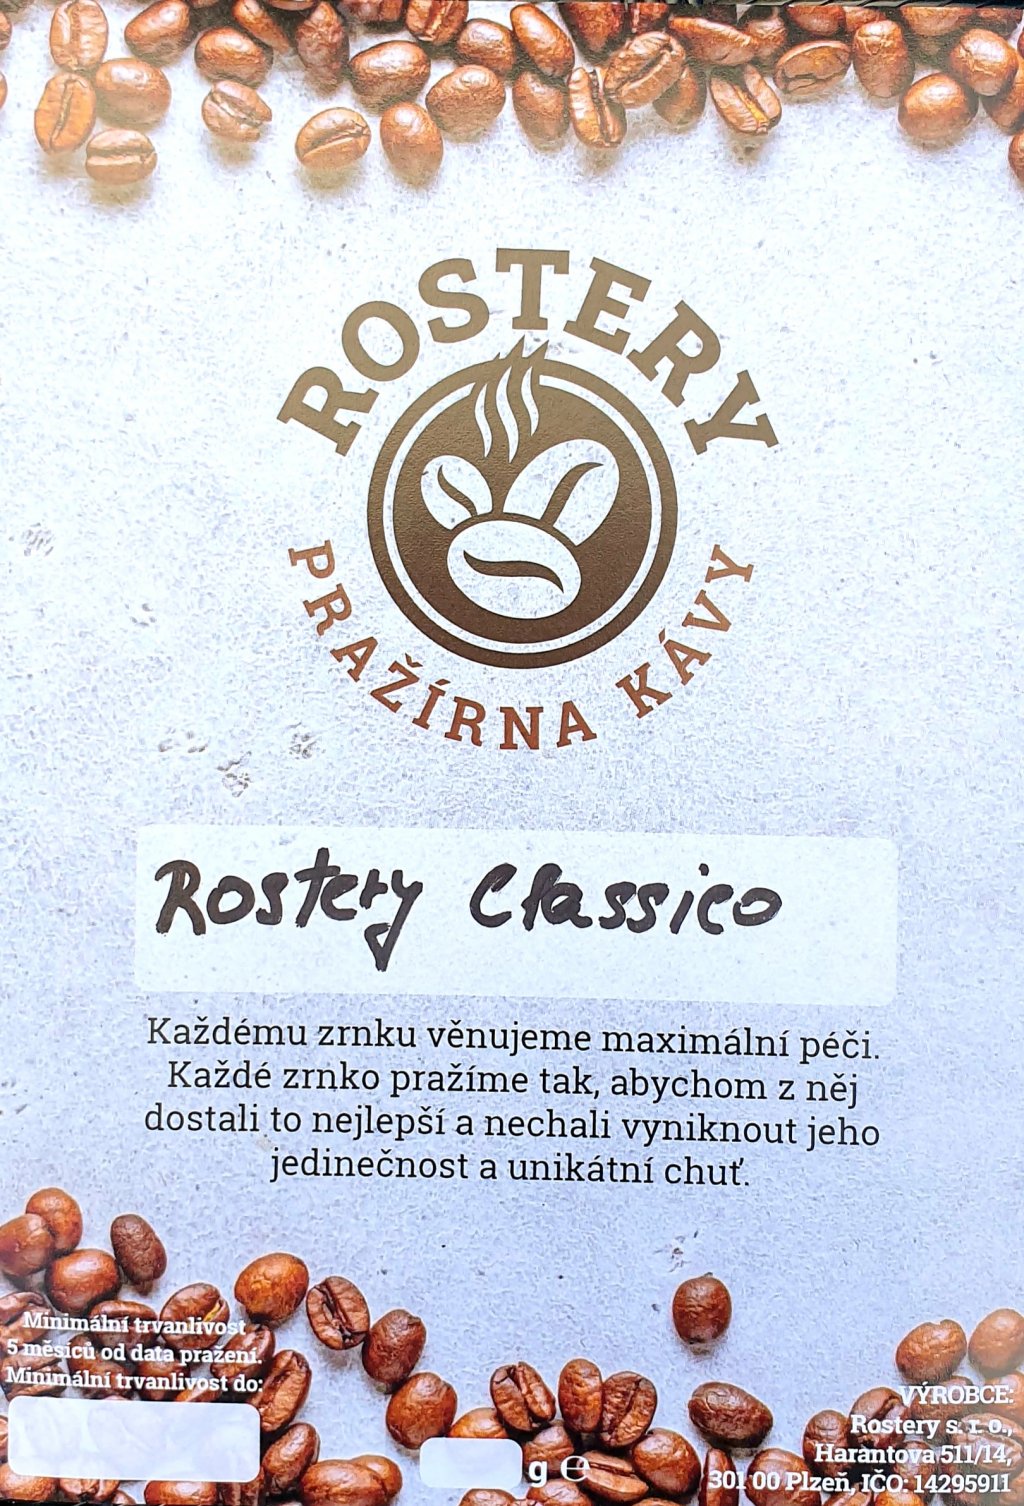 Rostery Classico